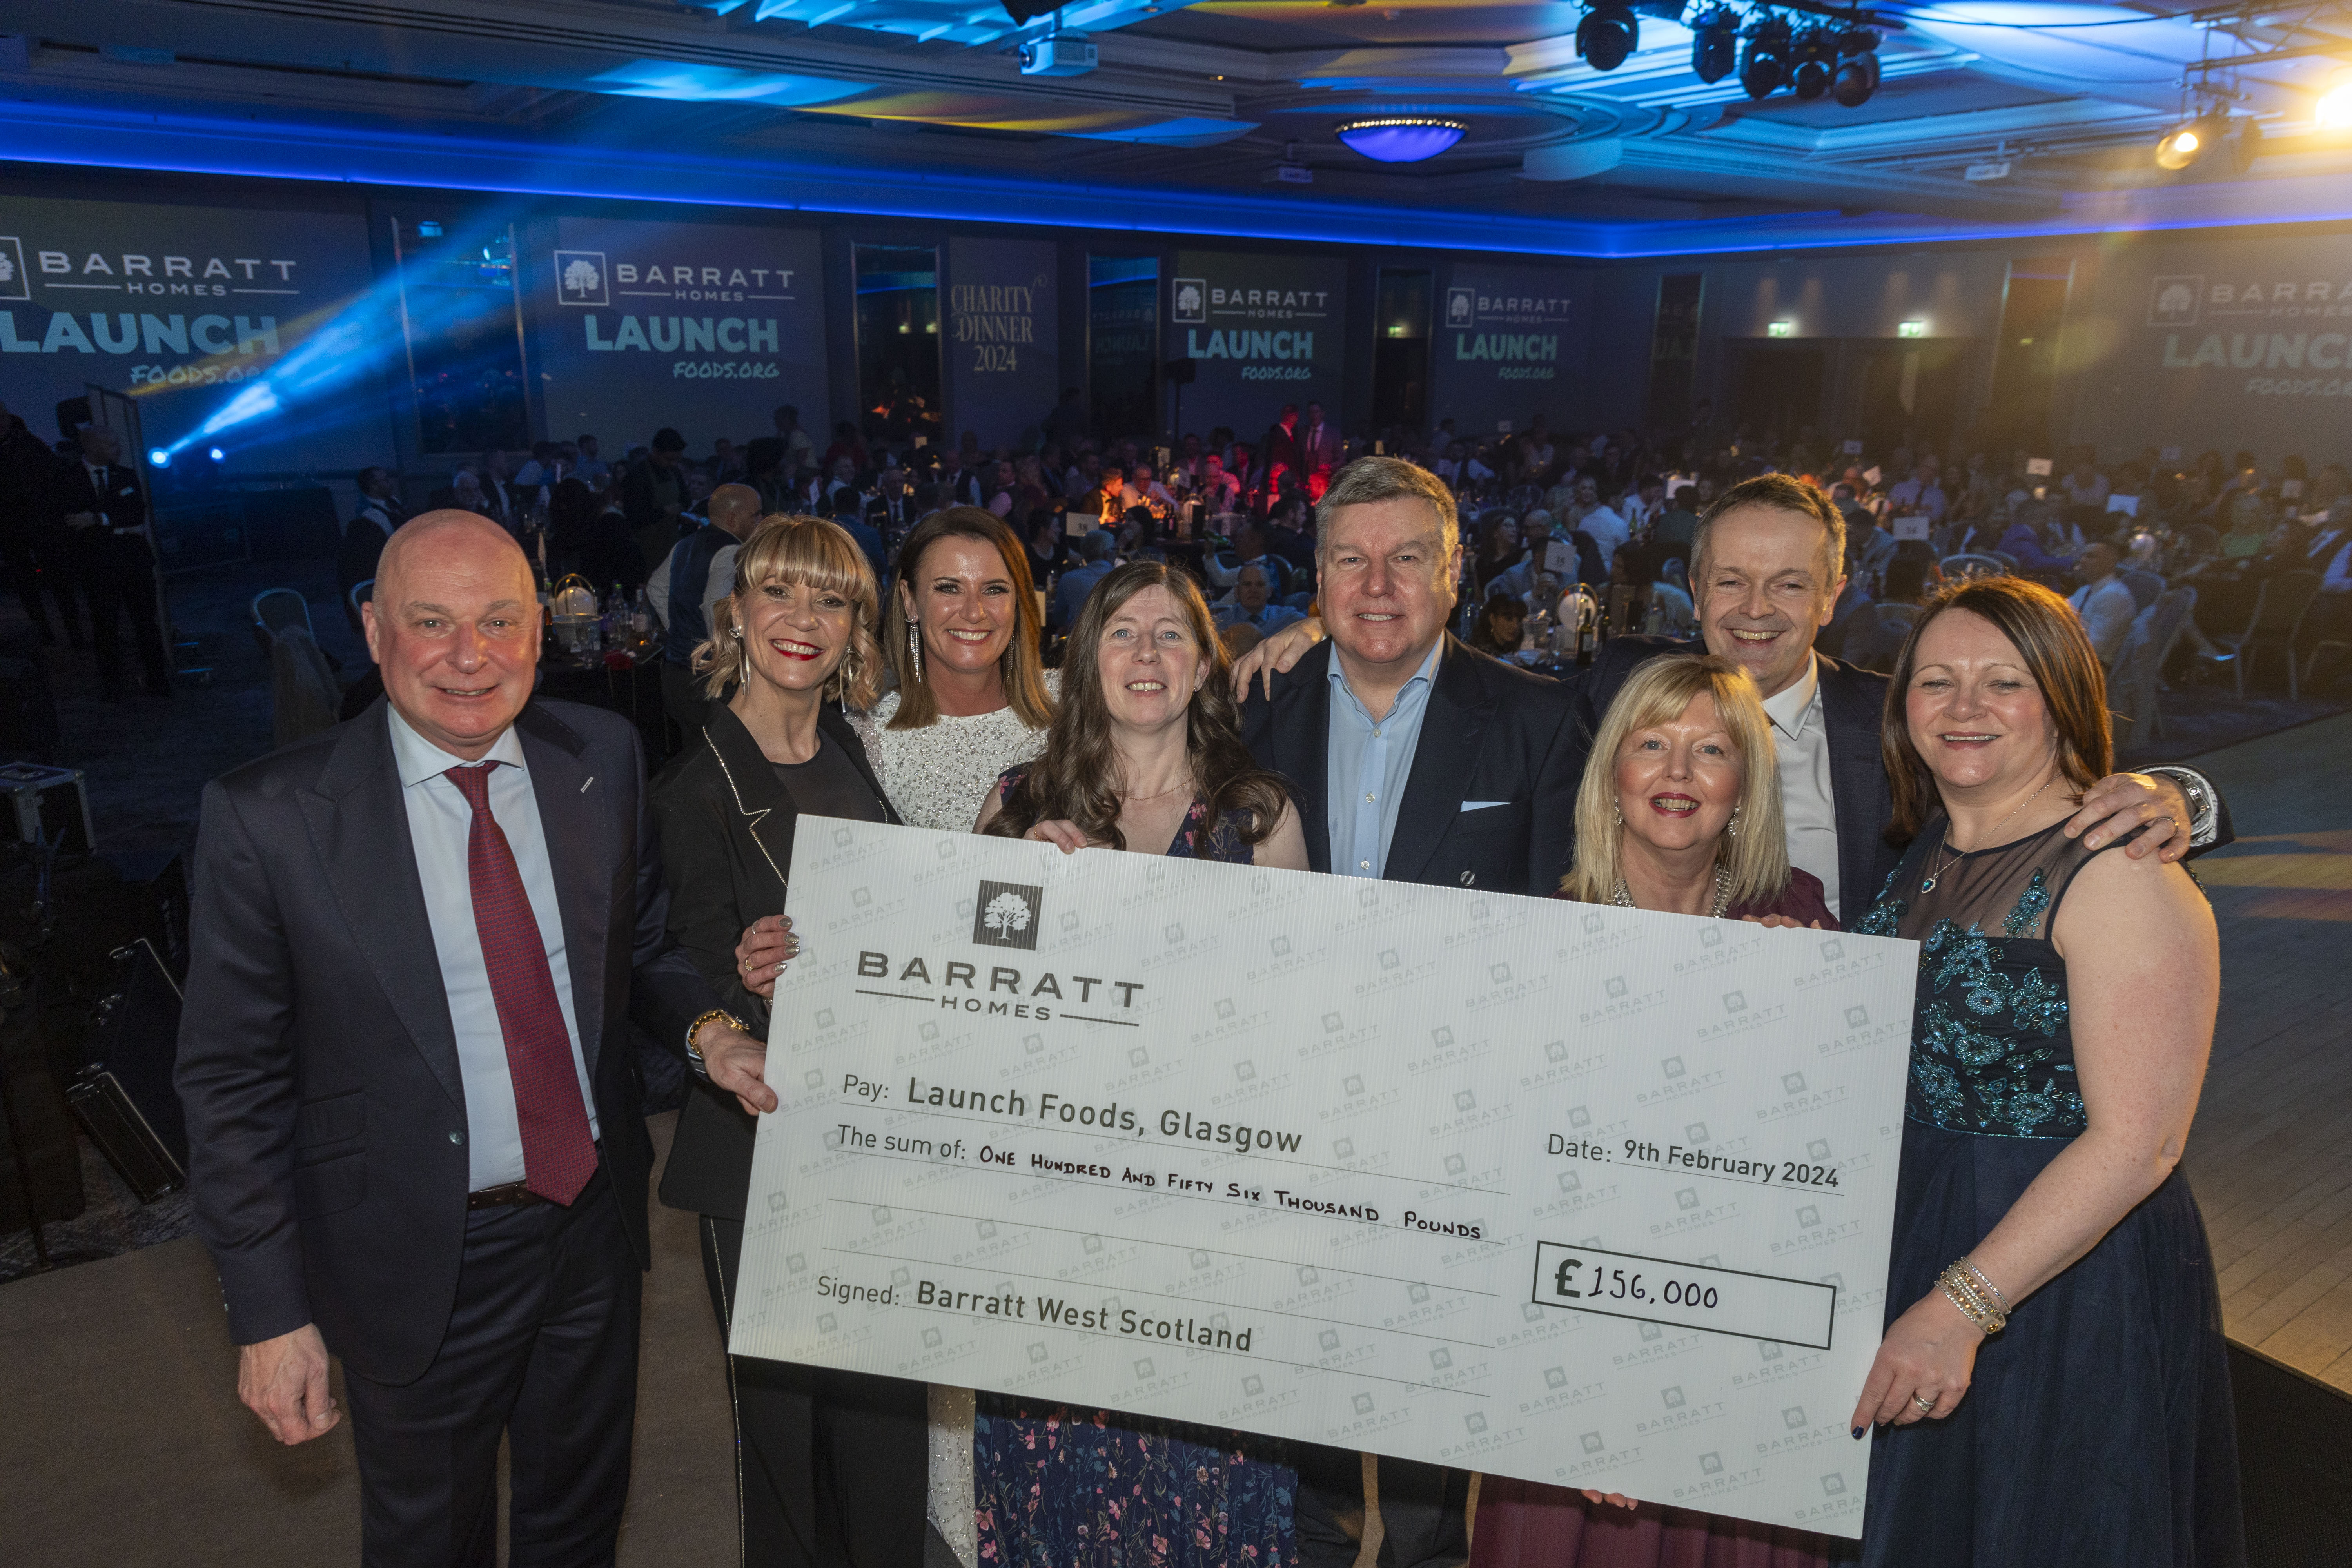 Charity Spotlight: Barratt raises over £150,000 to help support Glasgow families